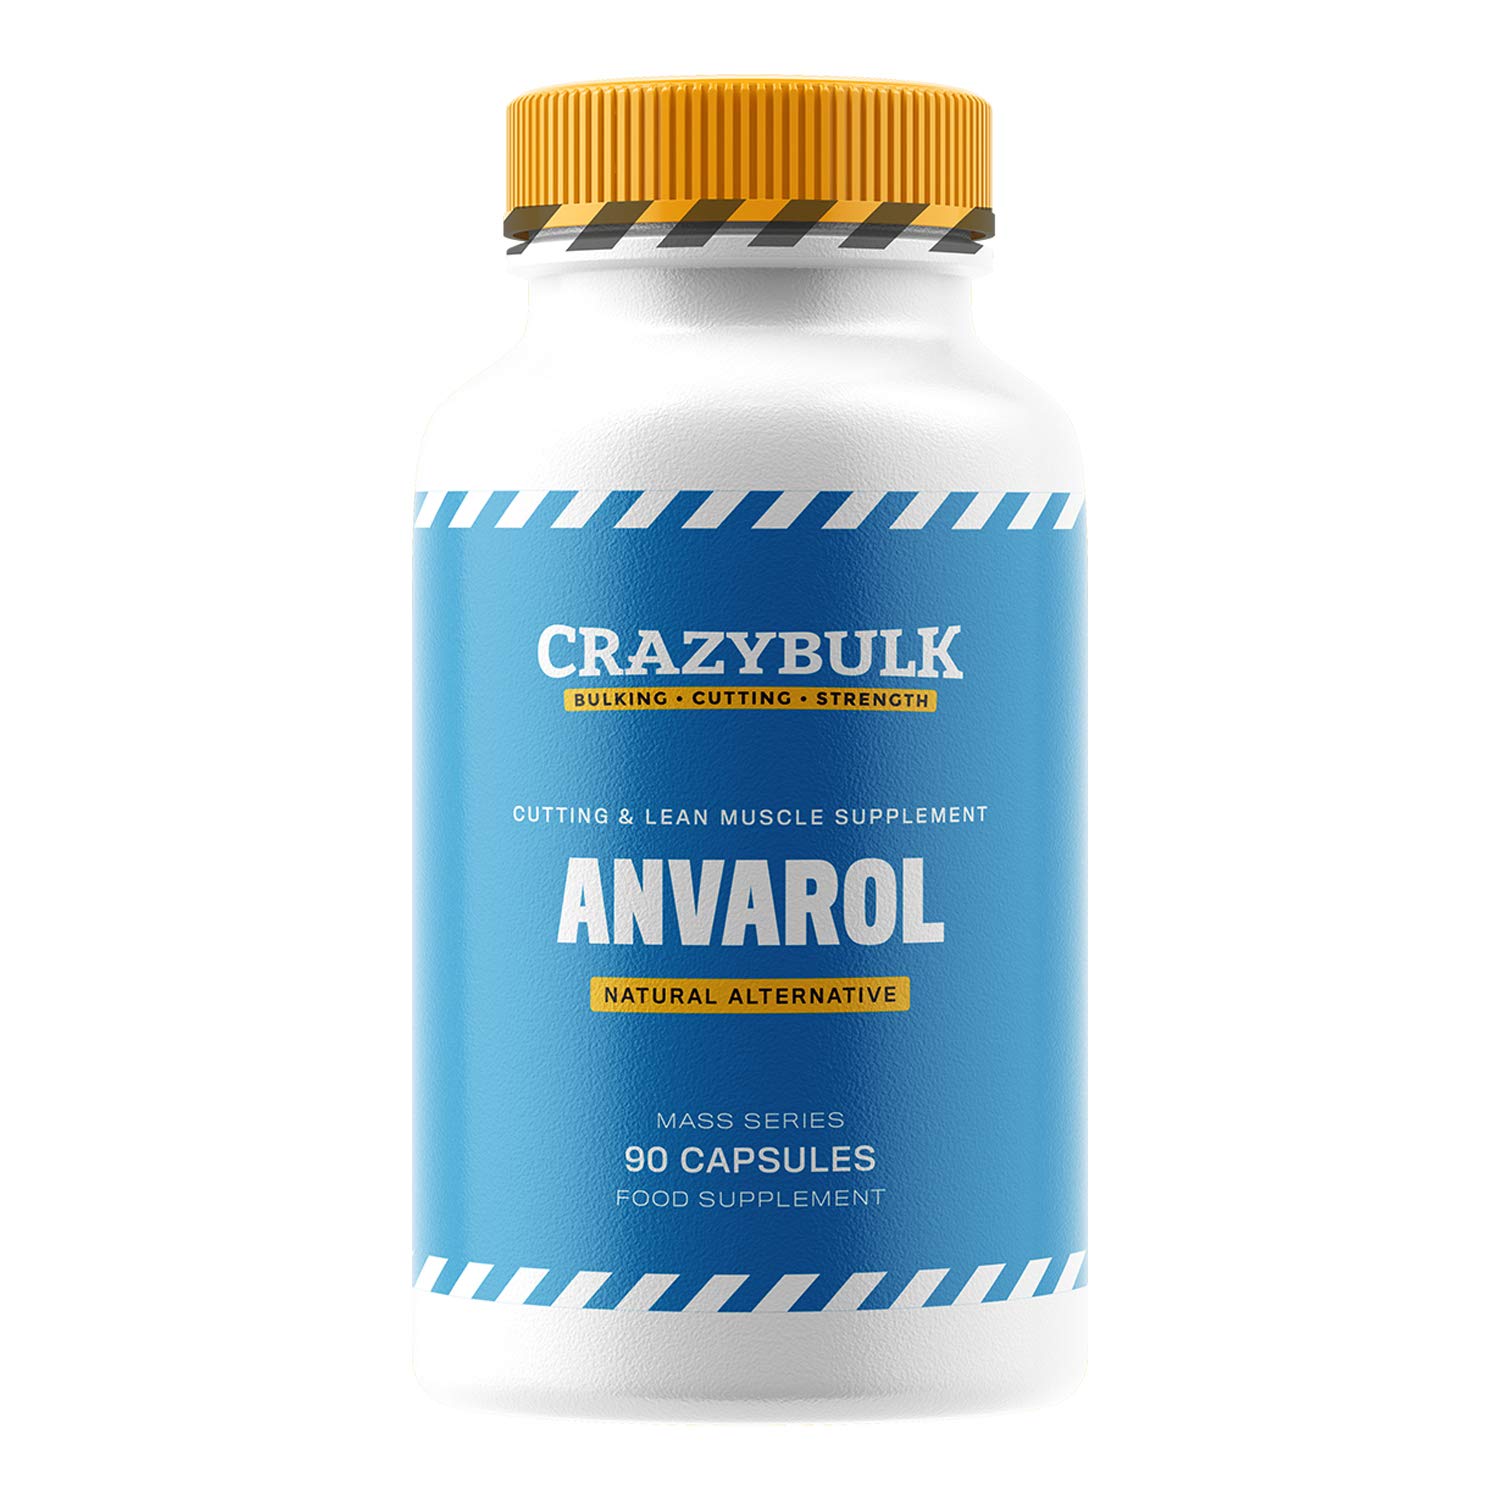 avarol - Can Steroids Regrow Hair?